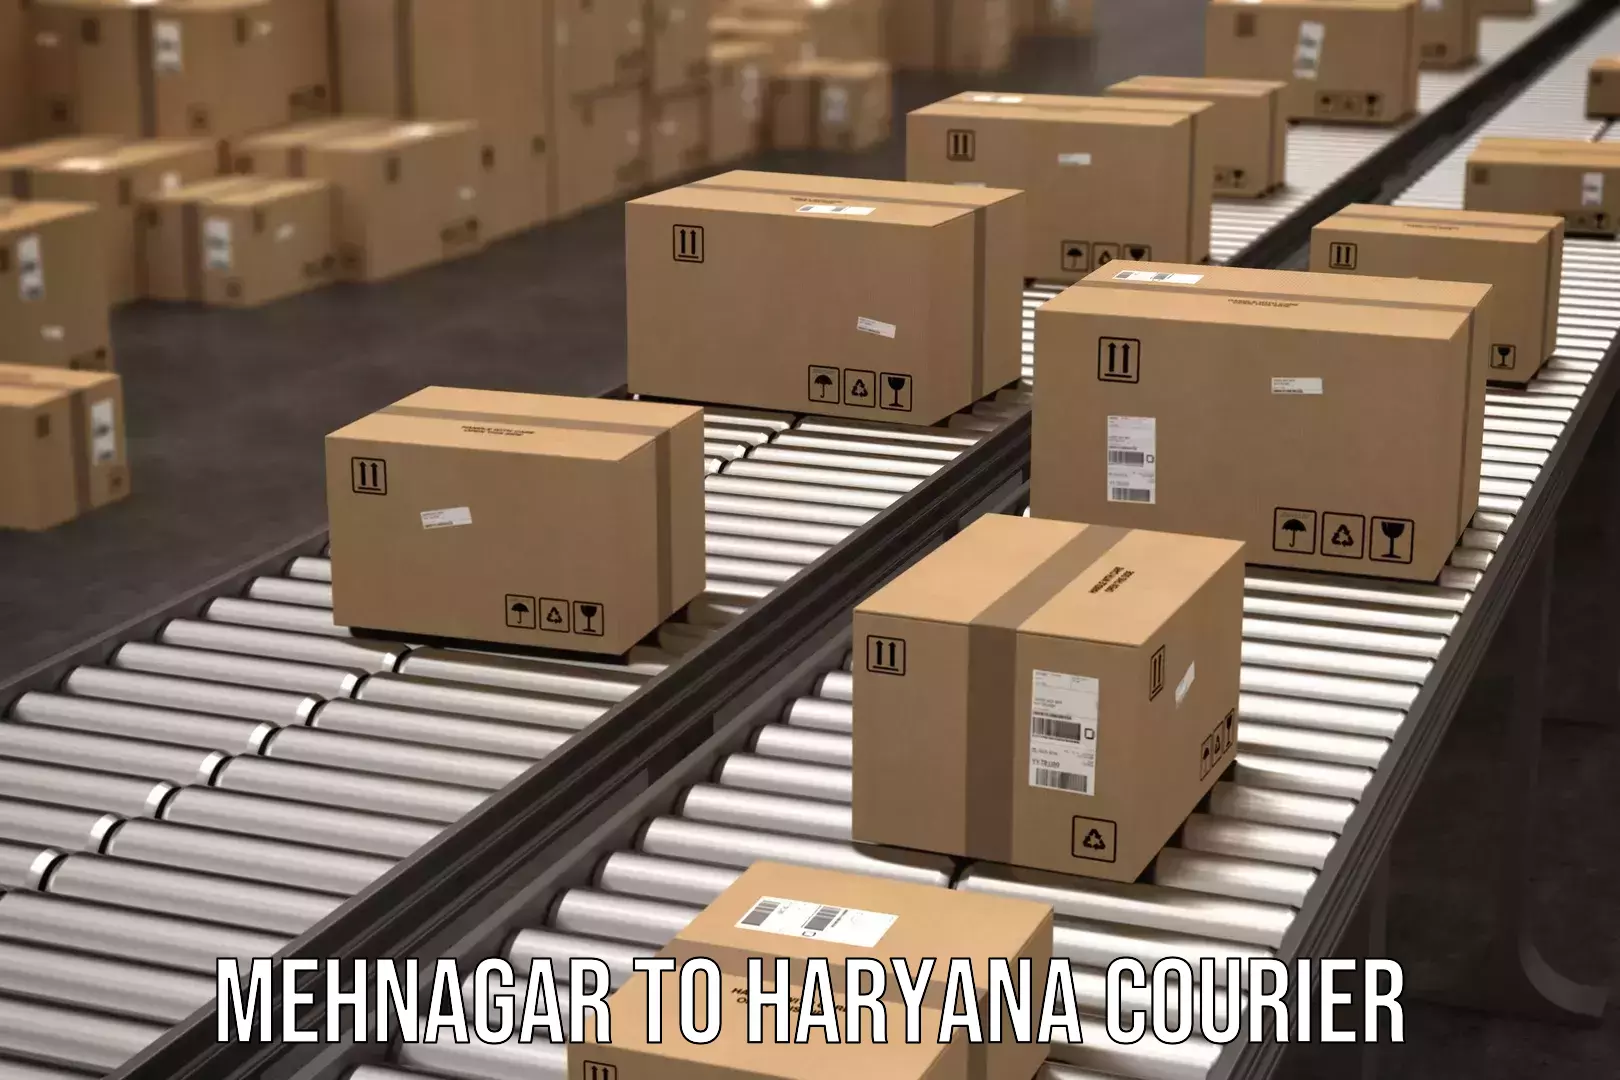 Speedy delivery service Mehnagar to Haryana